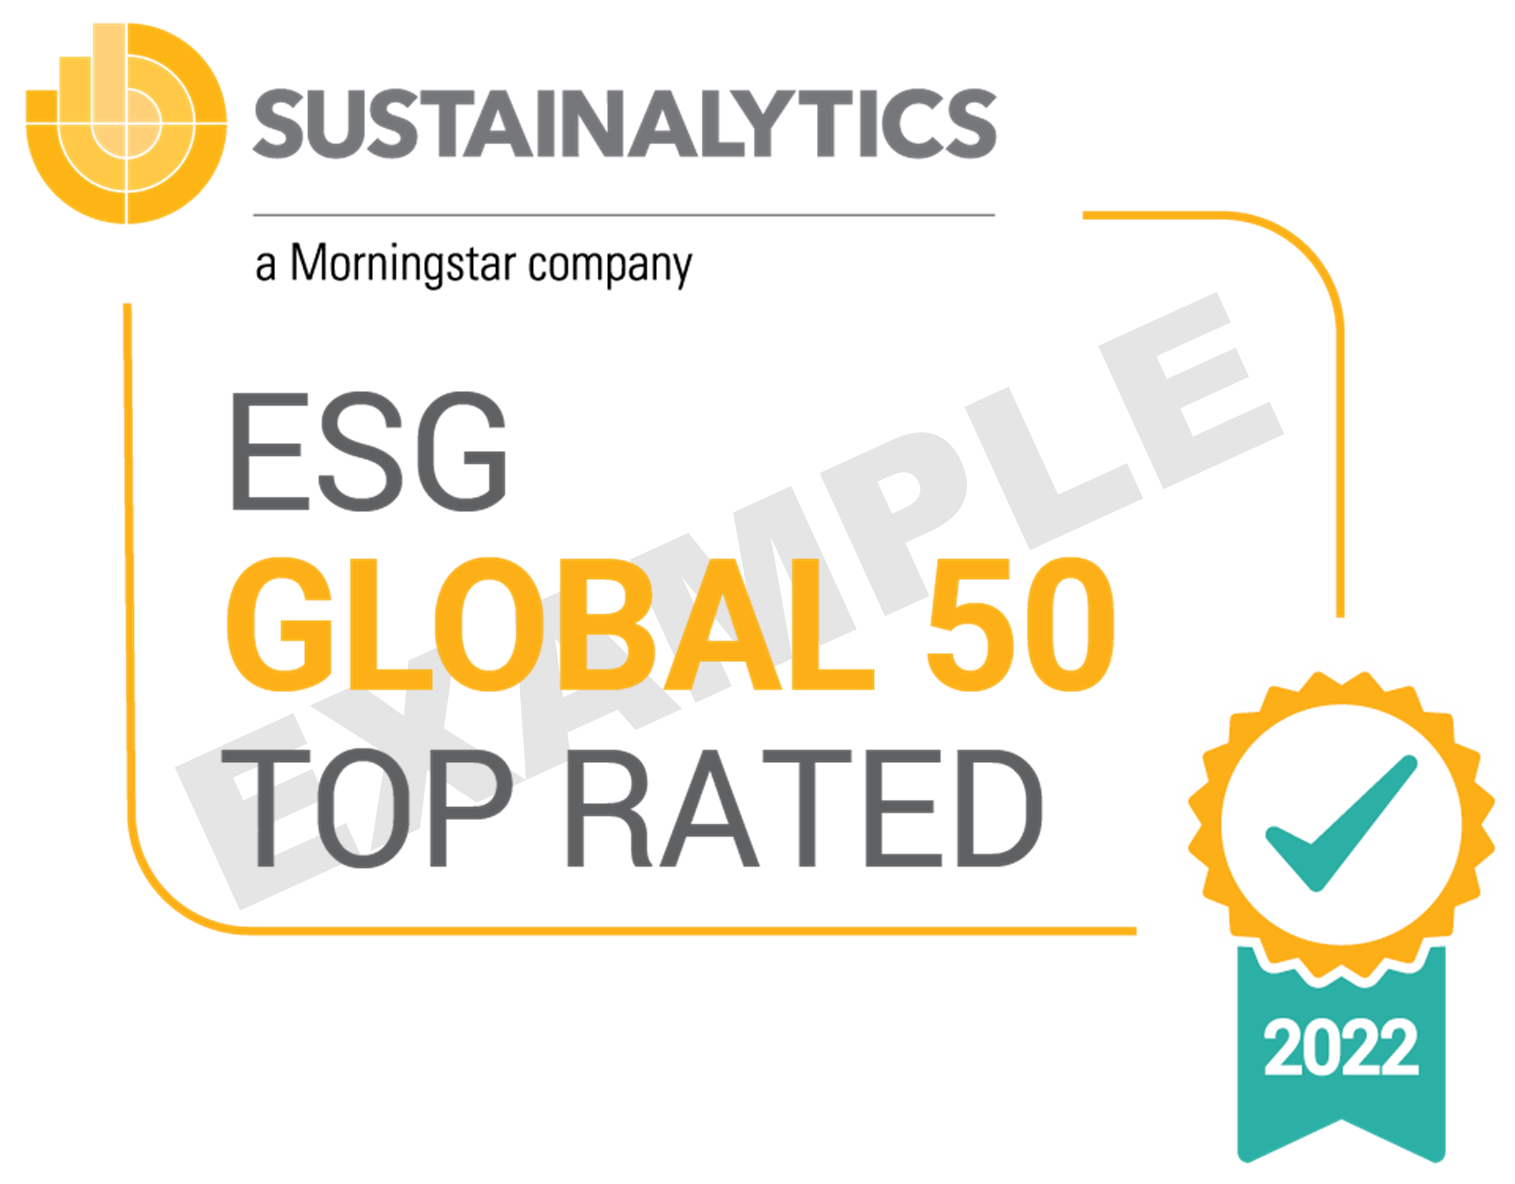 ESG global 50 top rated